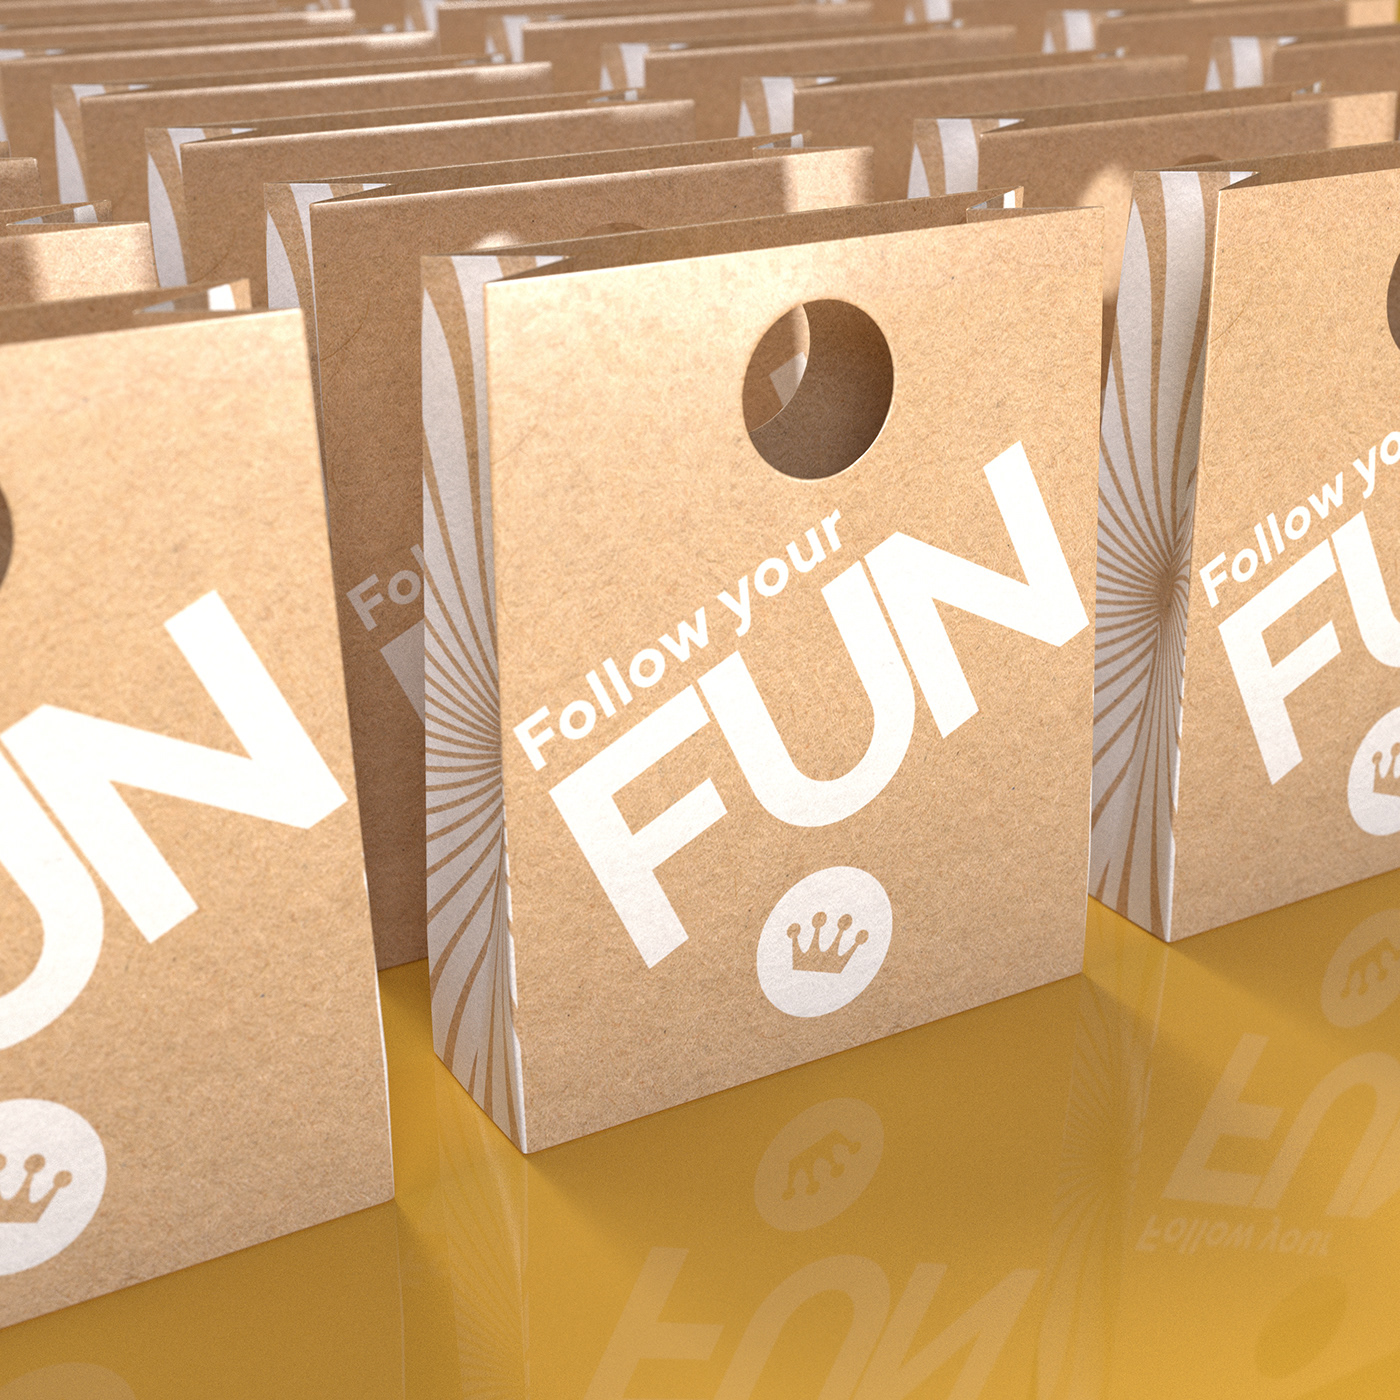 Funko funko pop brand identity refresh visual identity Brand Design